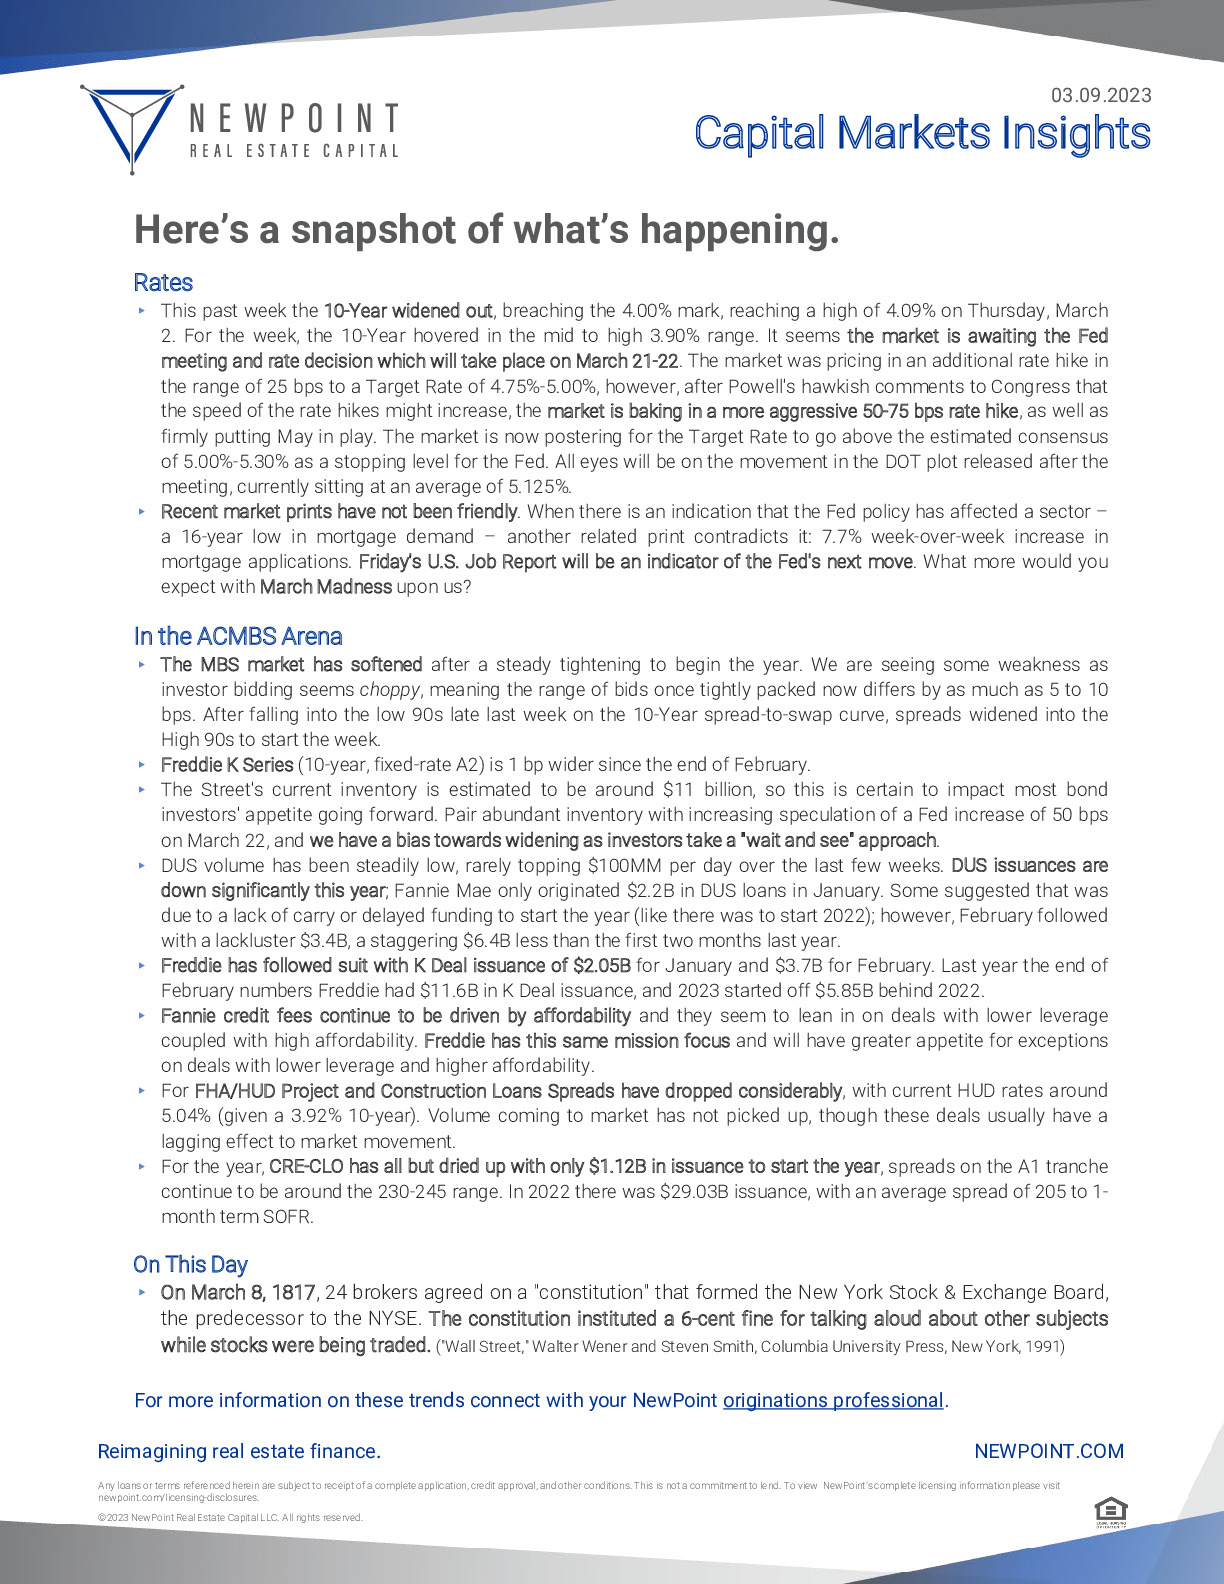 NewPoint Capital Markets Insights_03.09.23.pdf